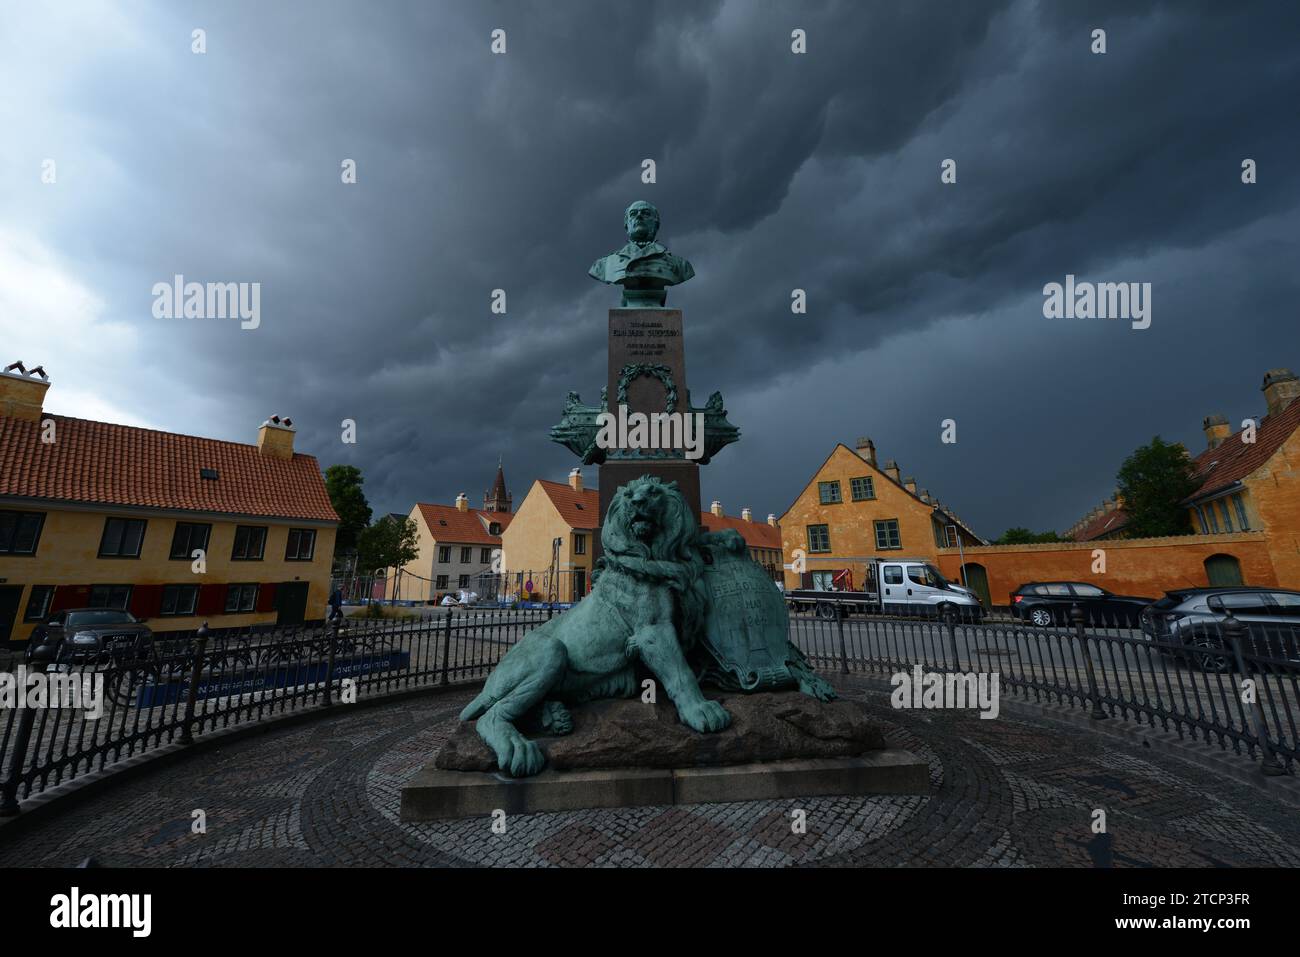 Das Edouard Suenson Memorial im Stadtteil Nyboder in Kopenhagen, Dänemark. Stockfoto